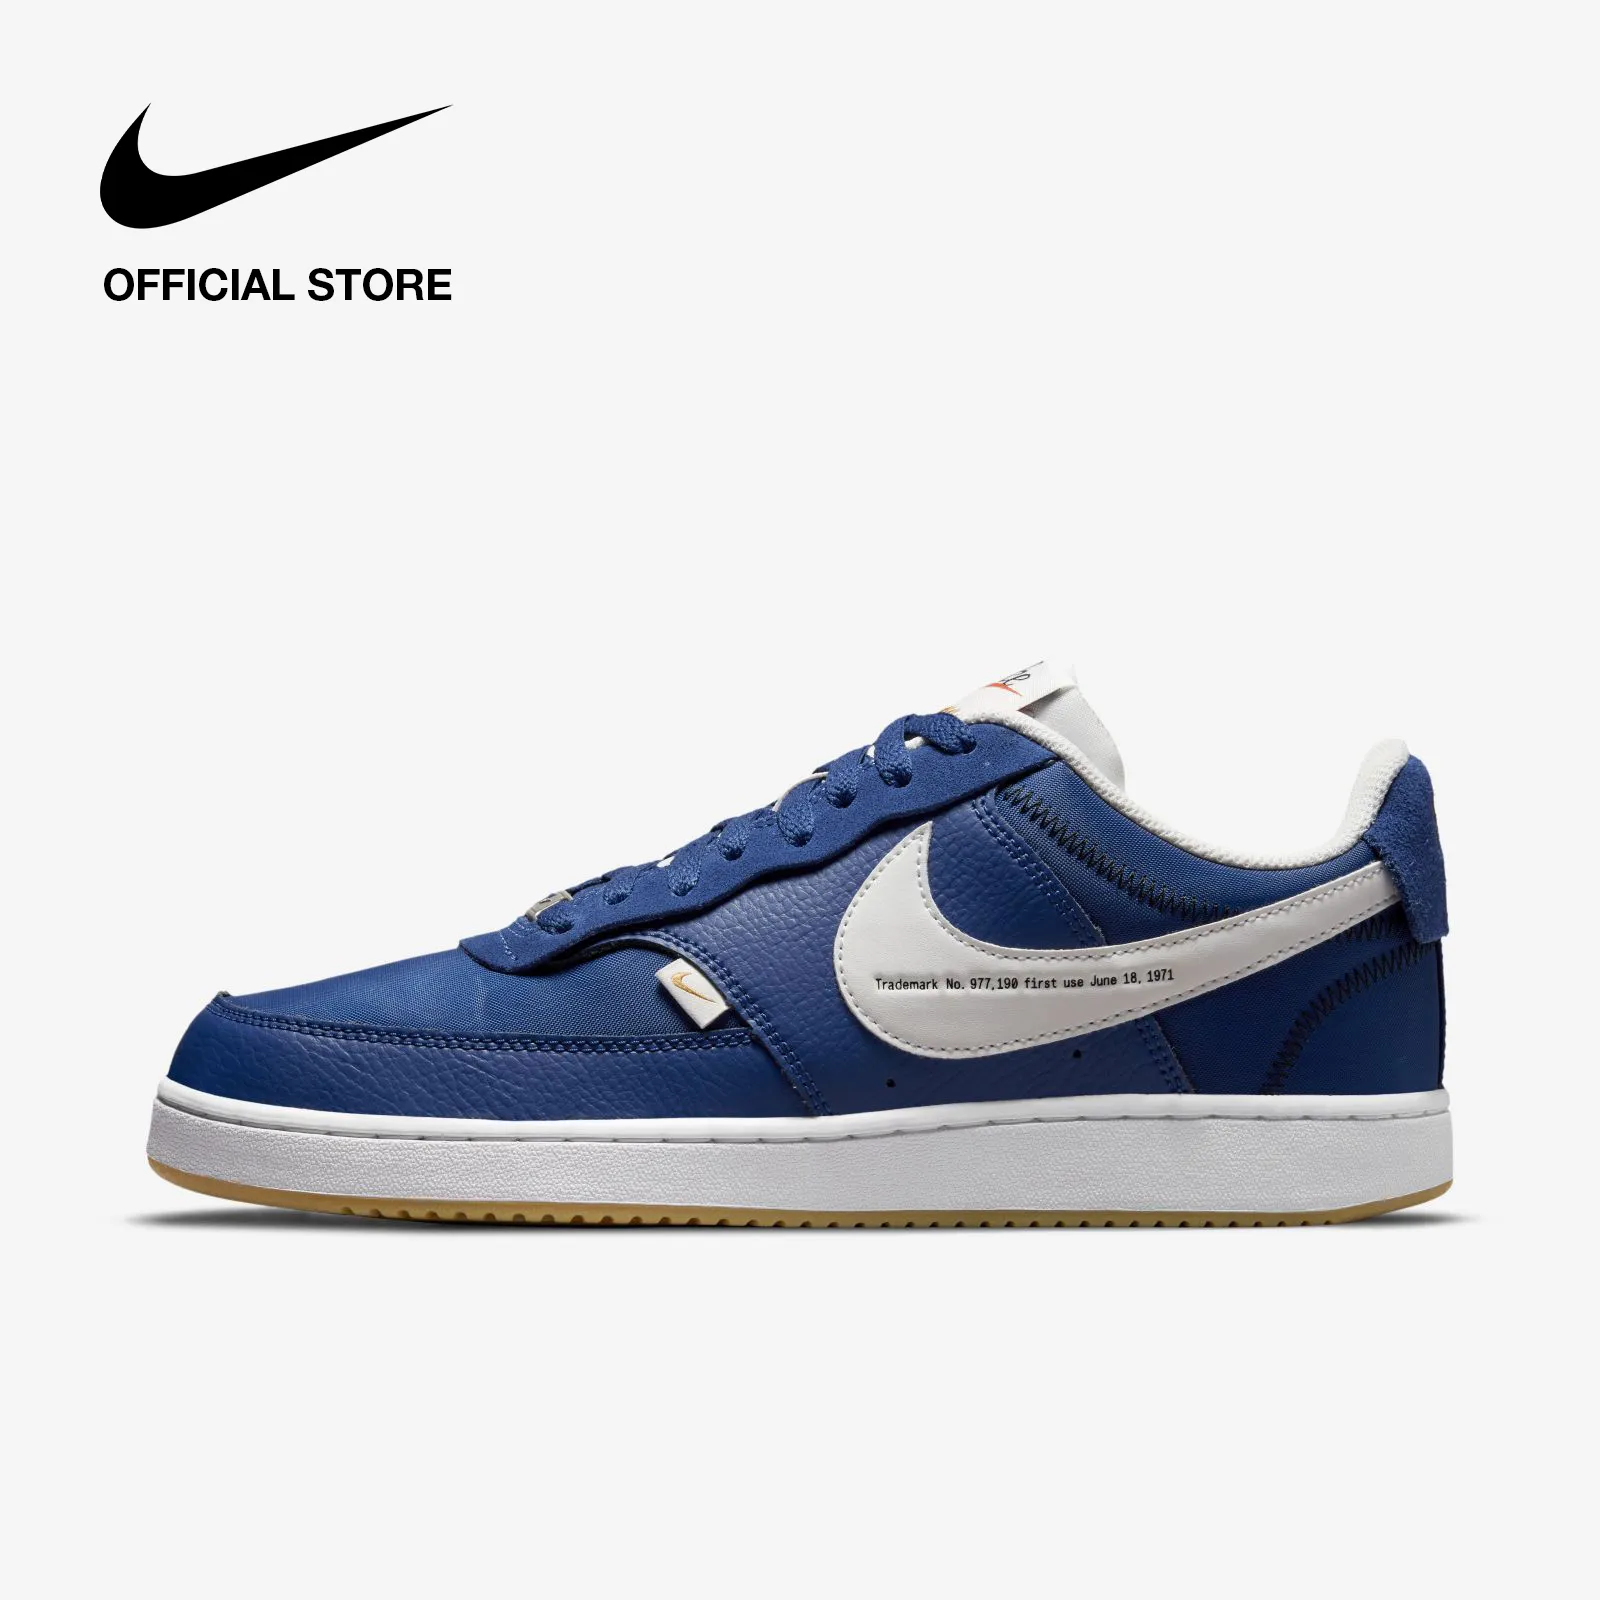 Nike Men's Court Vision Low Premium Shoes - Deep Royal Blue ไนกี้ รองเท้าผู้ชาย คอร์ท วิชั่น โลว์ พรีเมียม - สีฟ้า